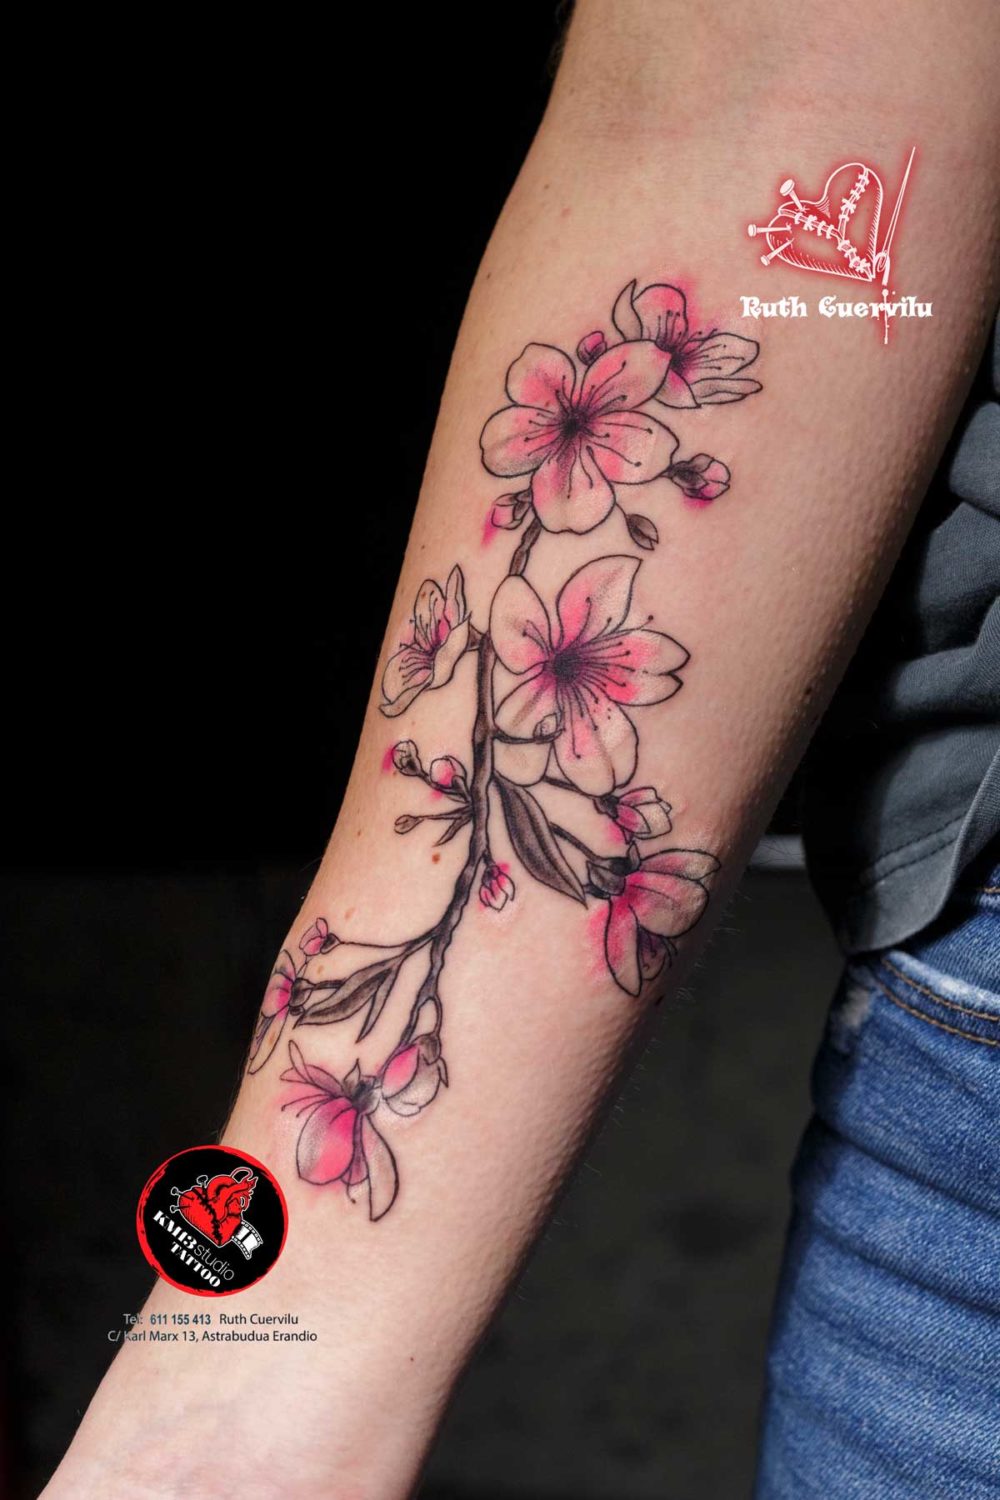 Tatuaje Iskander, gafas sol emoji y flor cerezo - Ruth Cuervilu Tattoo - KM13 Studio - estudio de tatuajes erandio astrabudua bilbao bizkaia